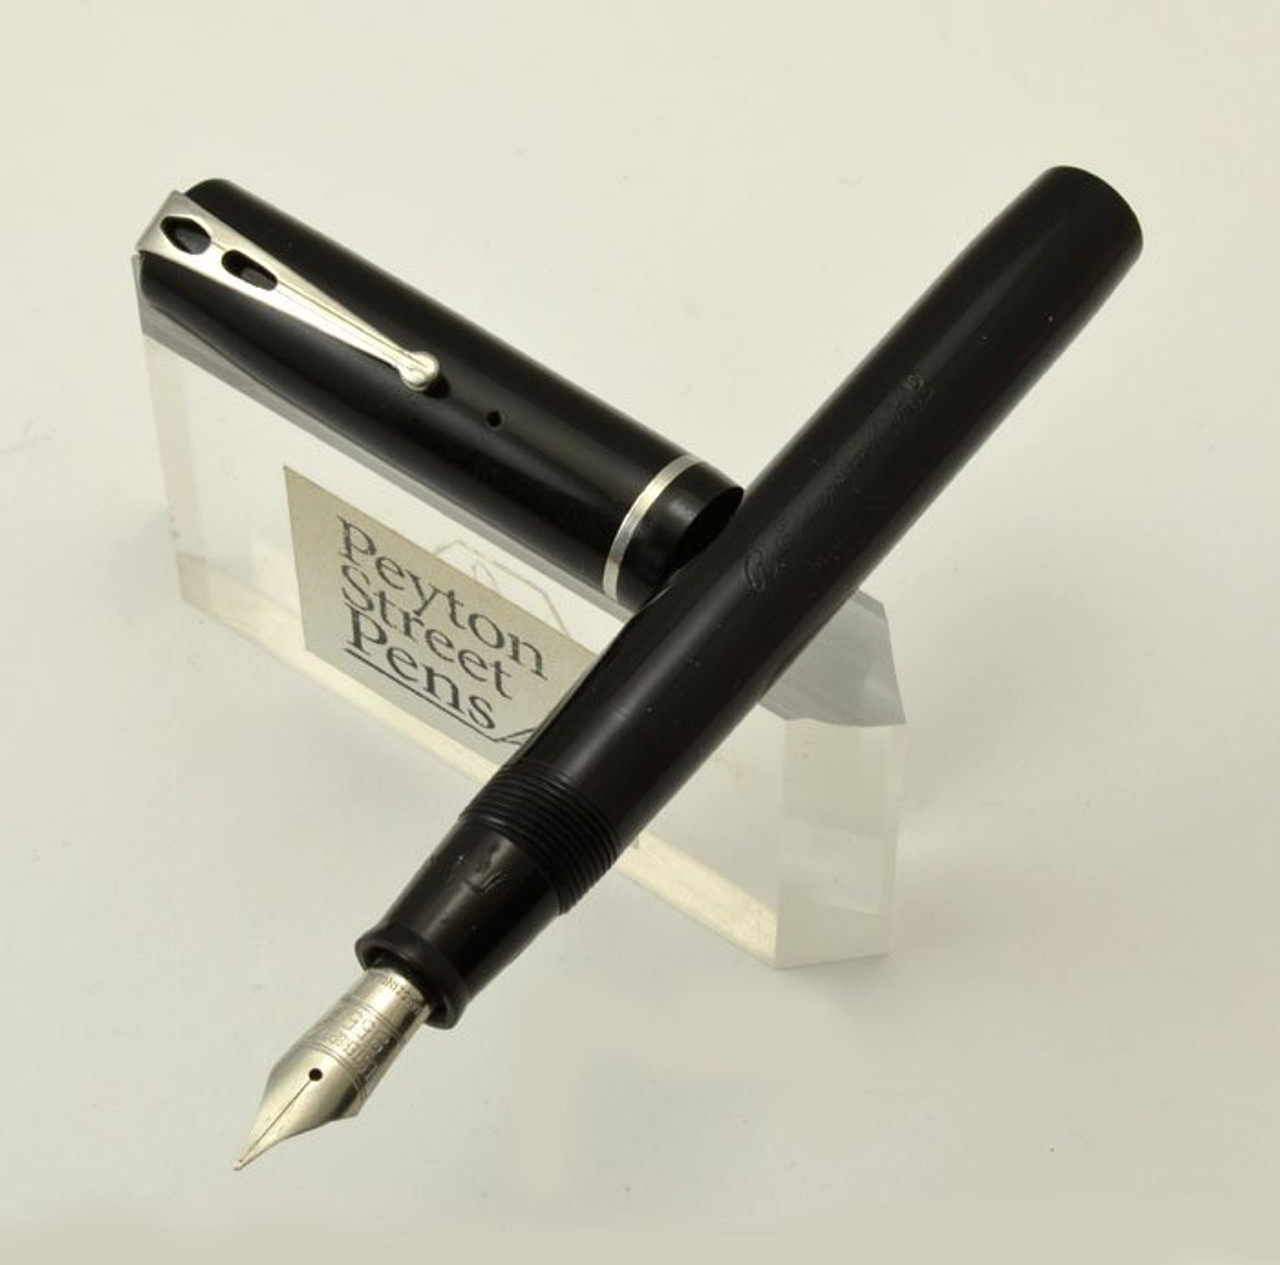 Esterbrook Dollar Fountain Pen - Full Size, Black 9556 Nib Fine Firm (Very Nice, Restored)